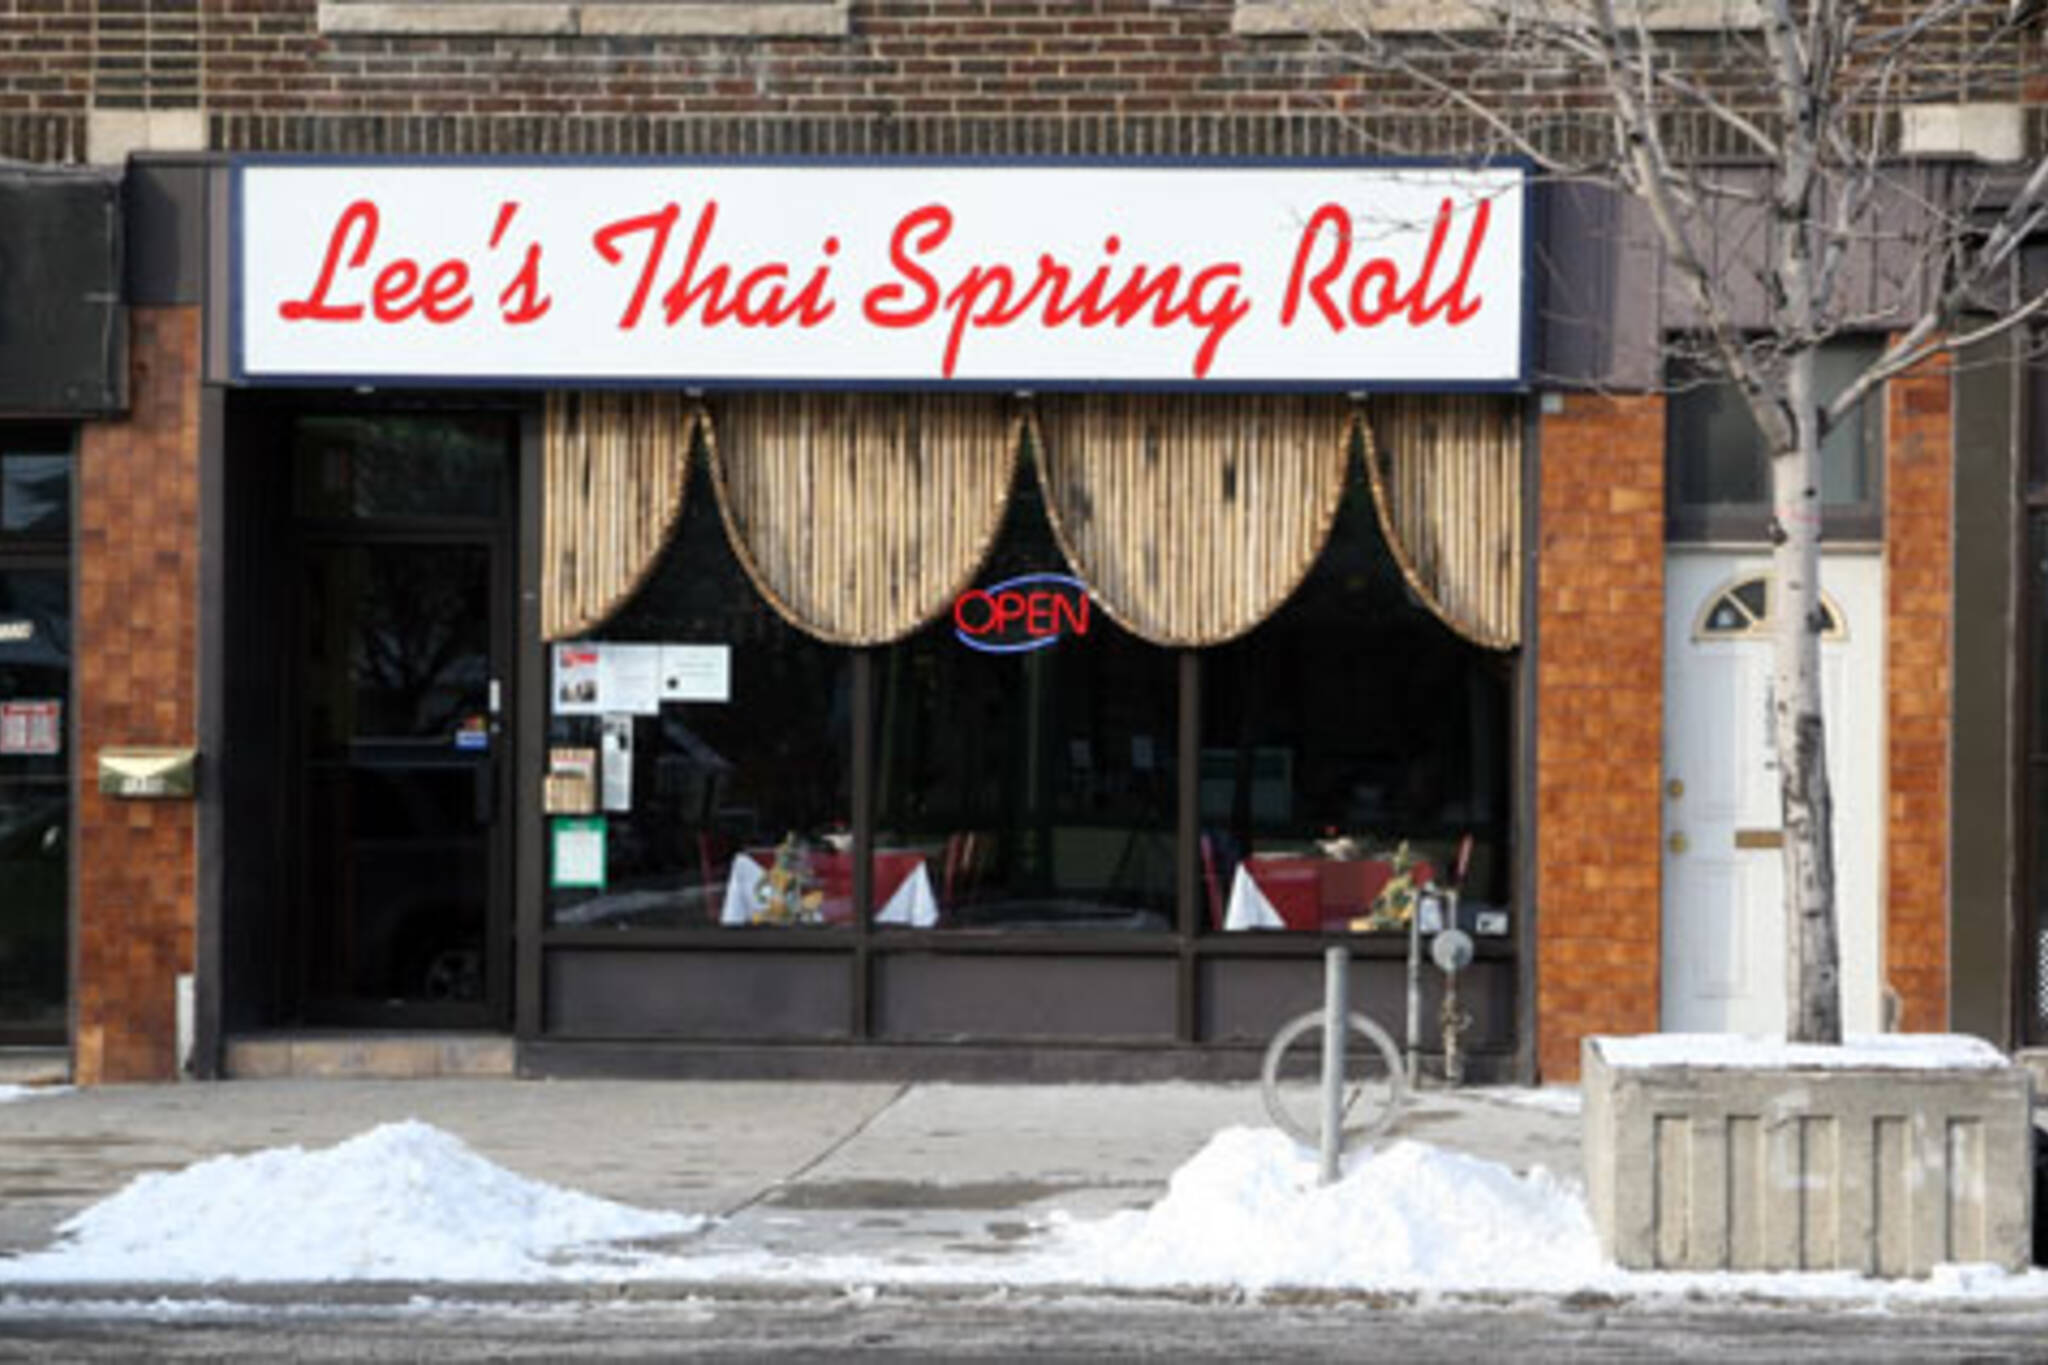 Lee's Thai Spring Roll